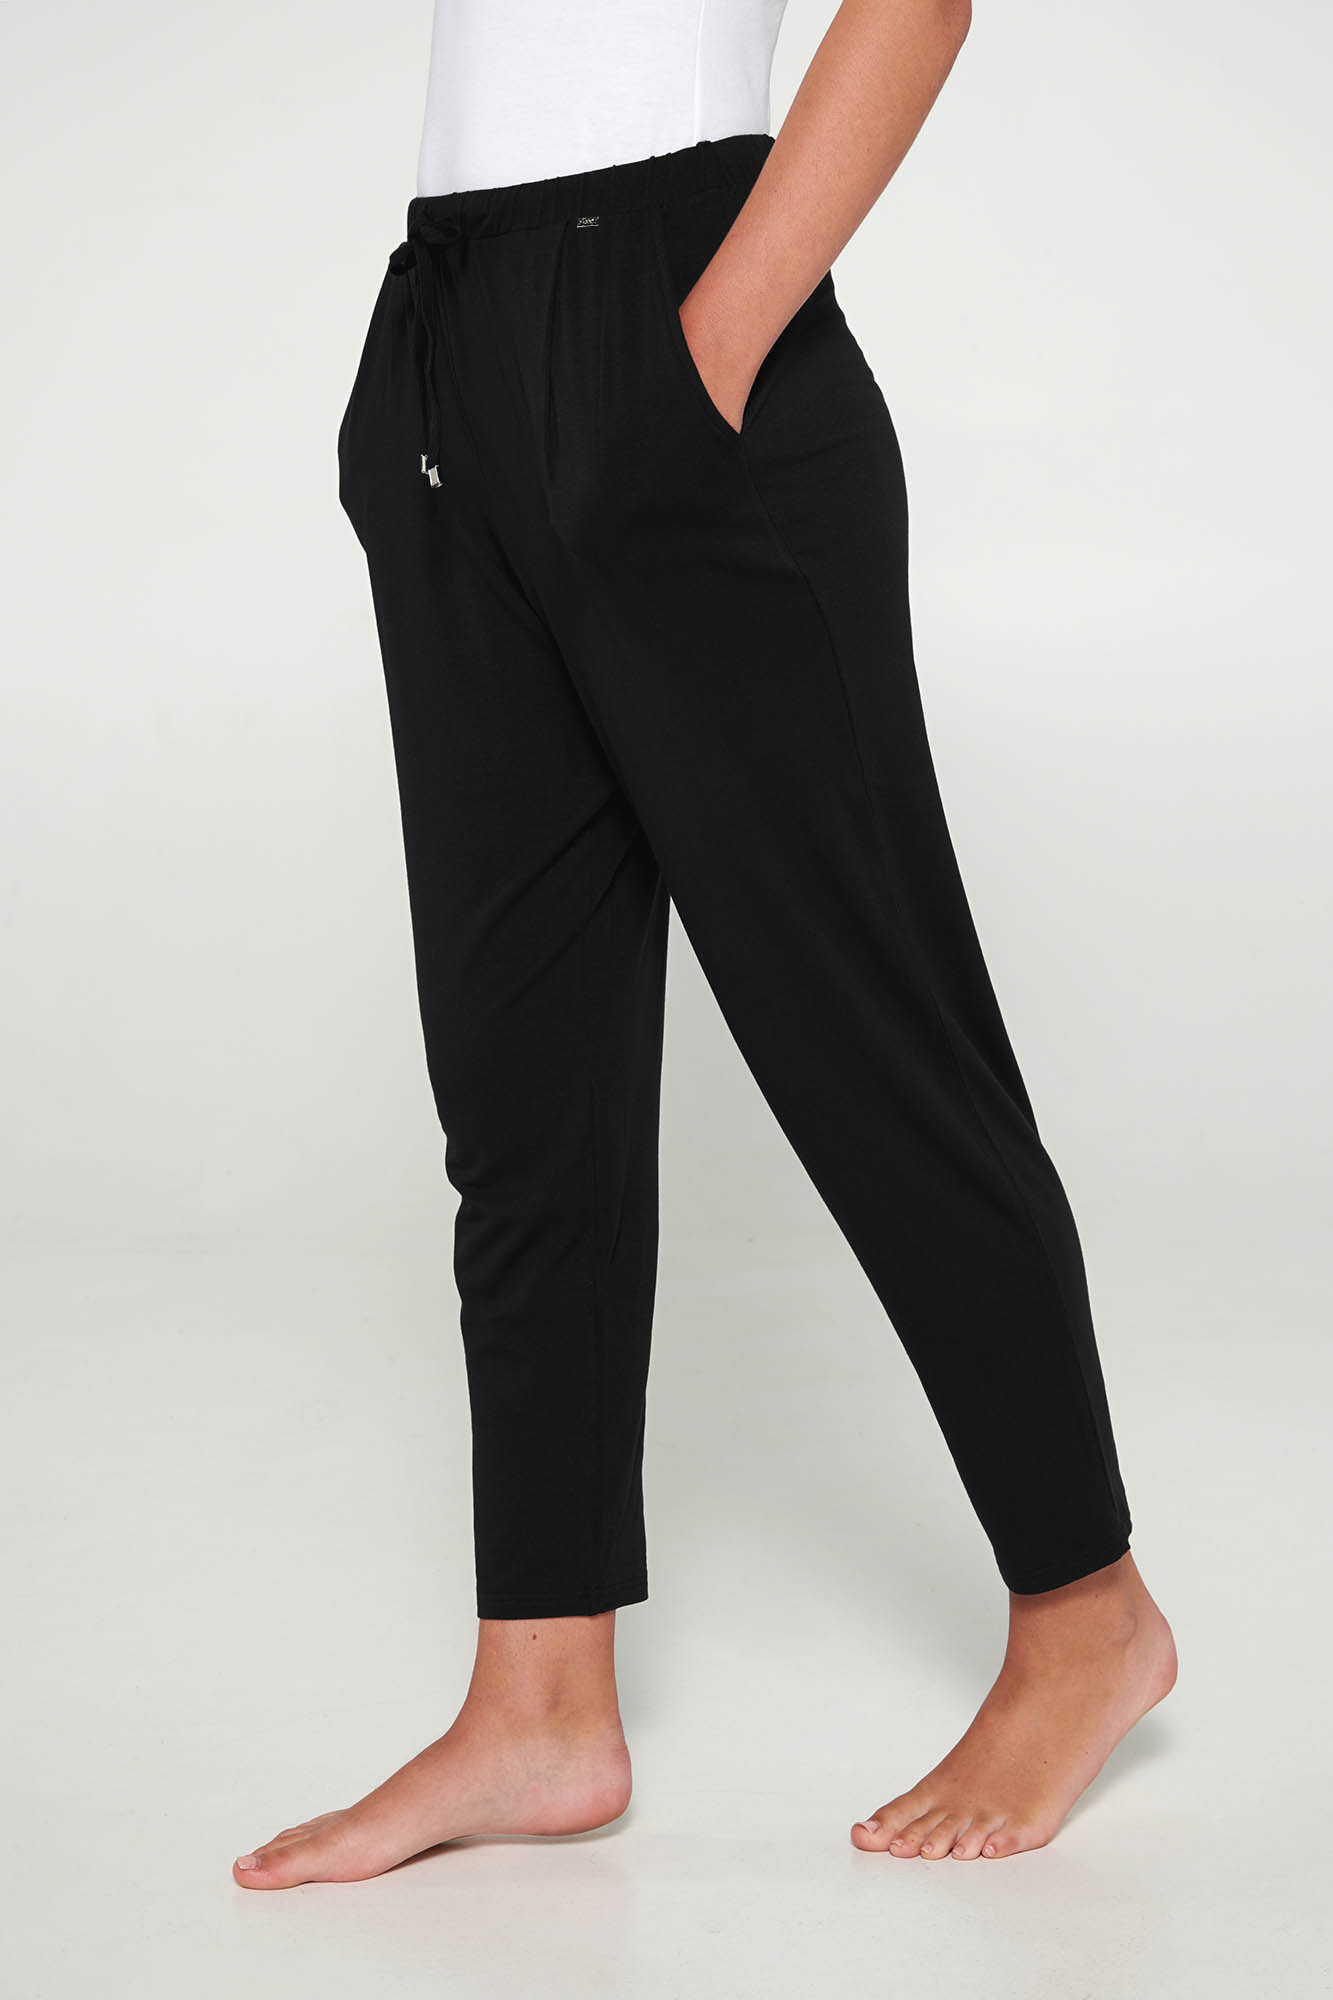 Vamp - Jednobarevné dámské kalhoty 20211 - Vamp black S